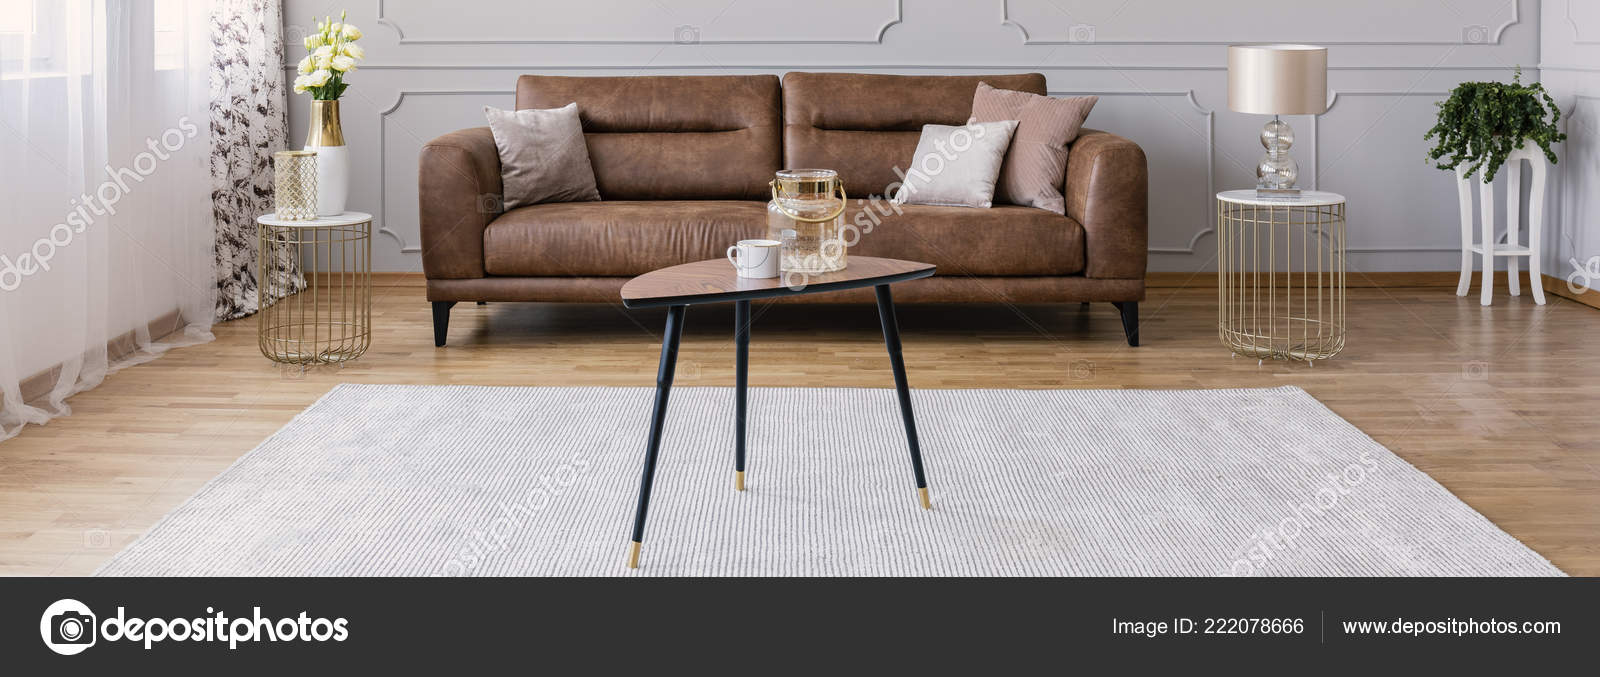 Panoramic View Stylish Interior Design, Small Brown Leather Sofa